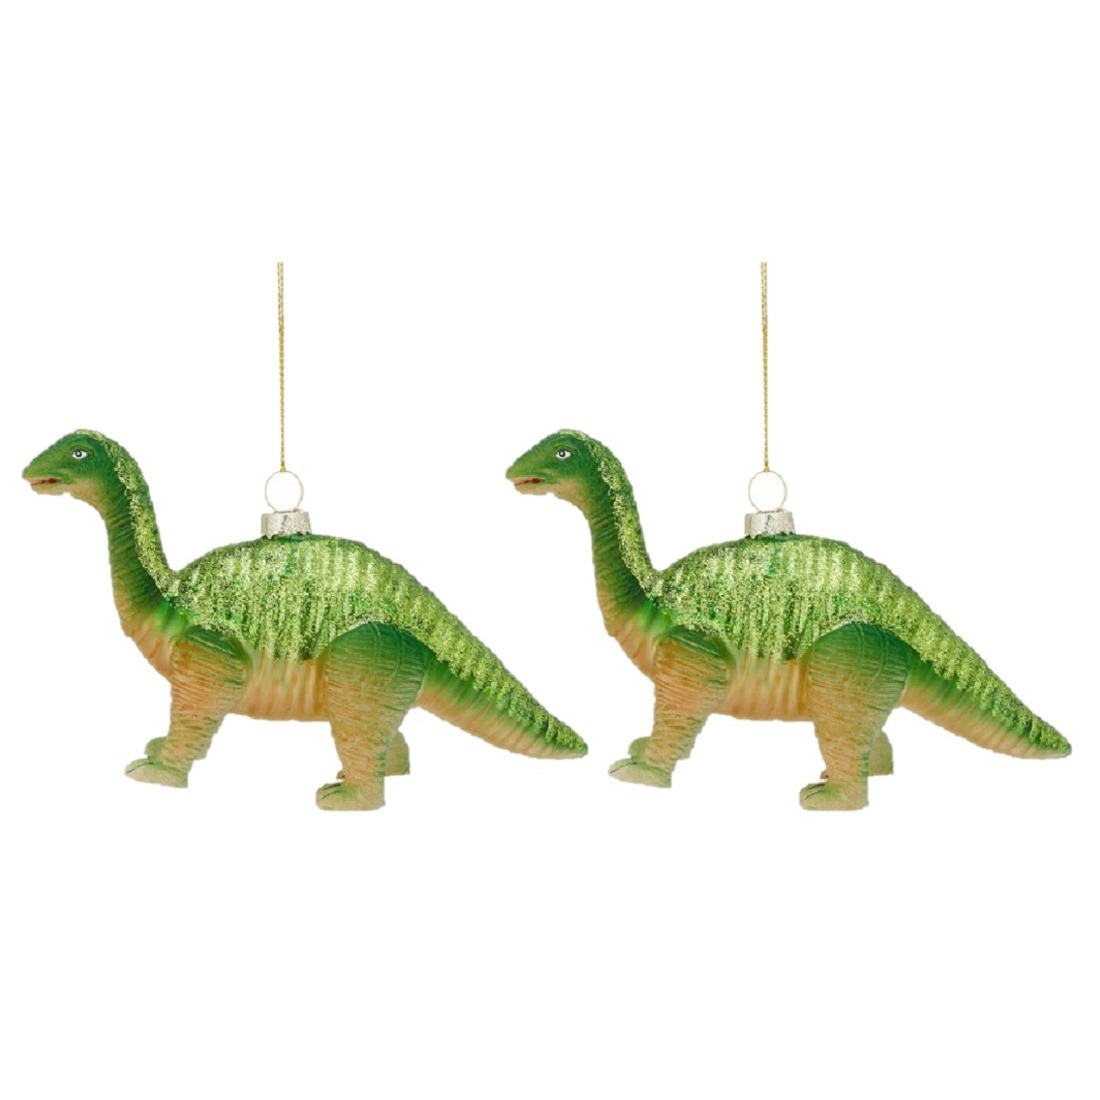 3x Kersthanger figuurtjes glazen dinosaurus groen 16 cm